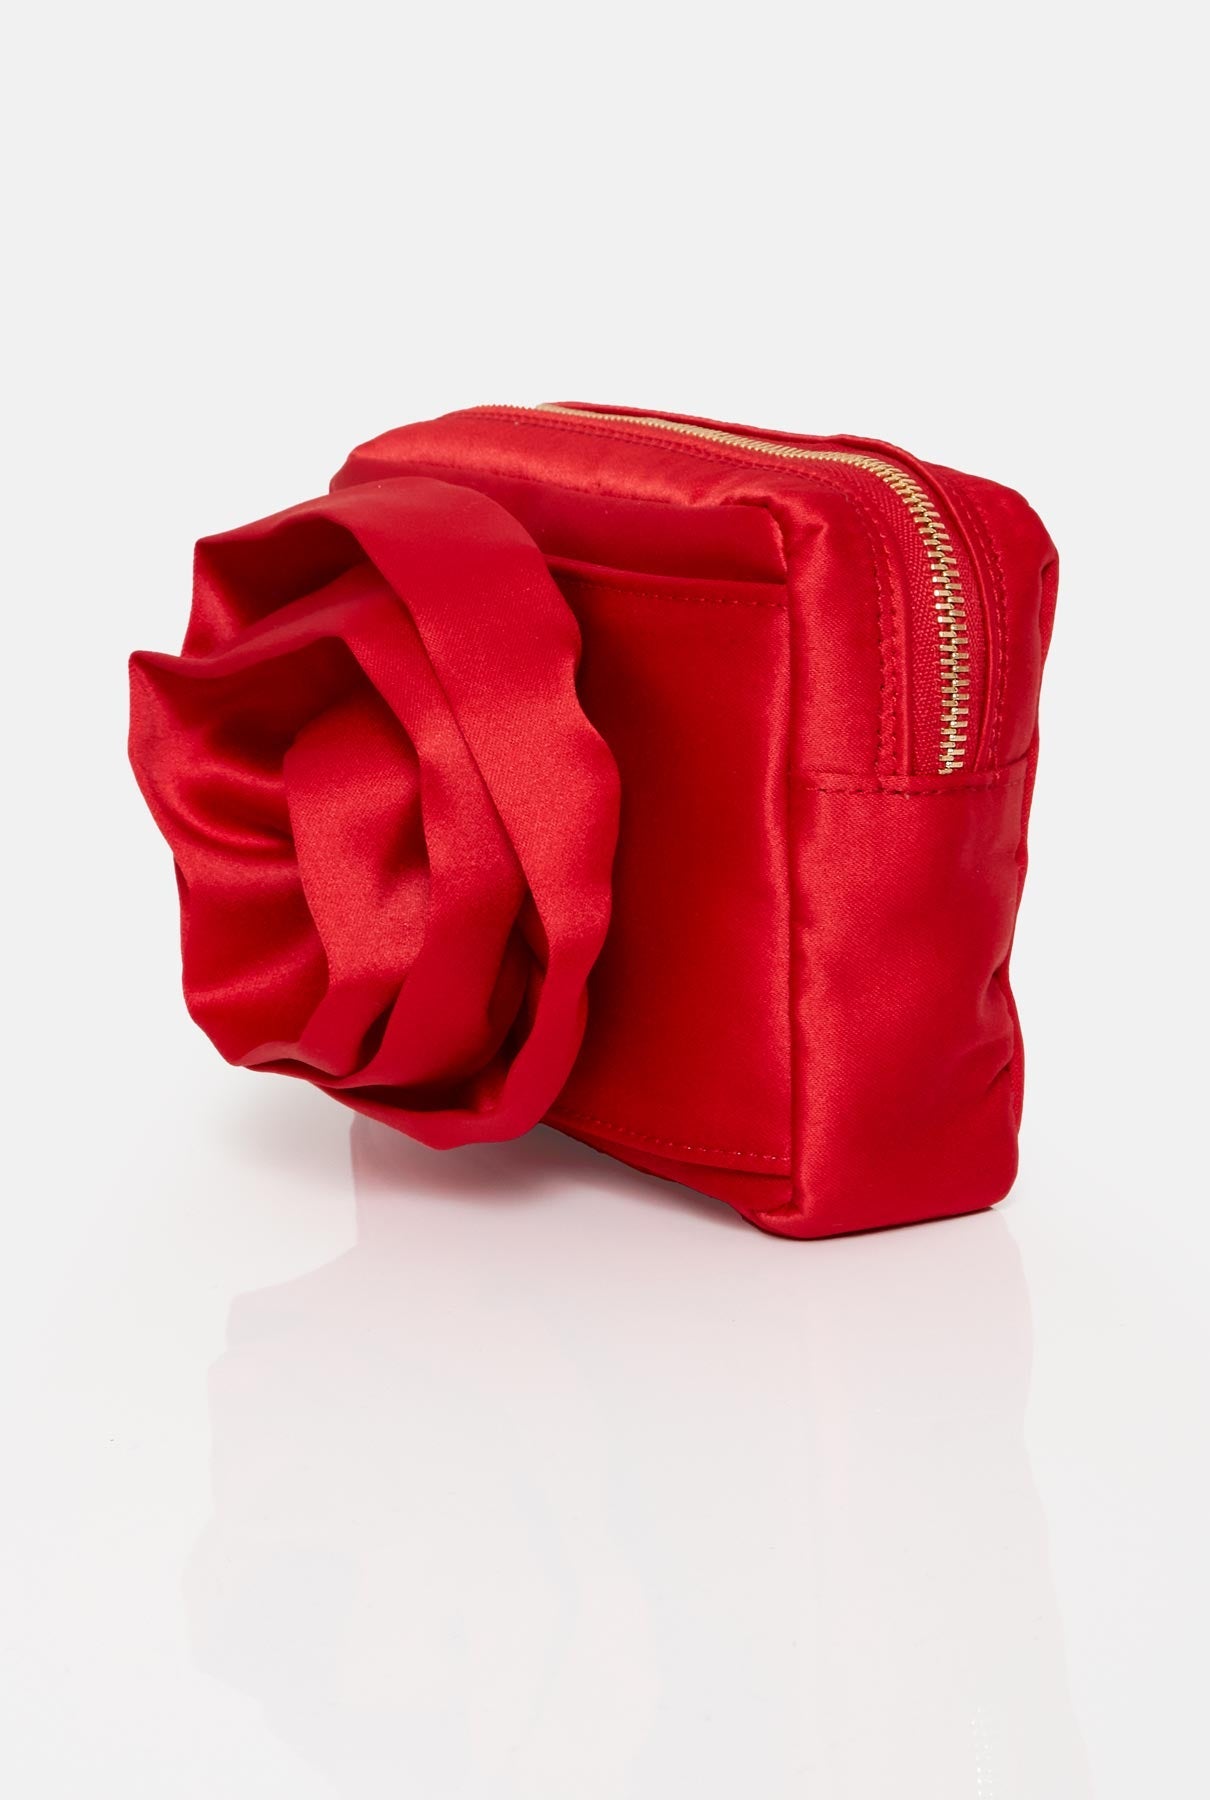 Pulseta bag Rose Red Hand bags Celina Martin 